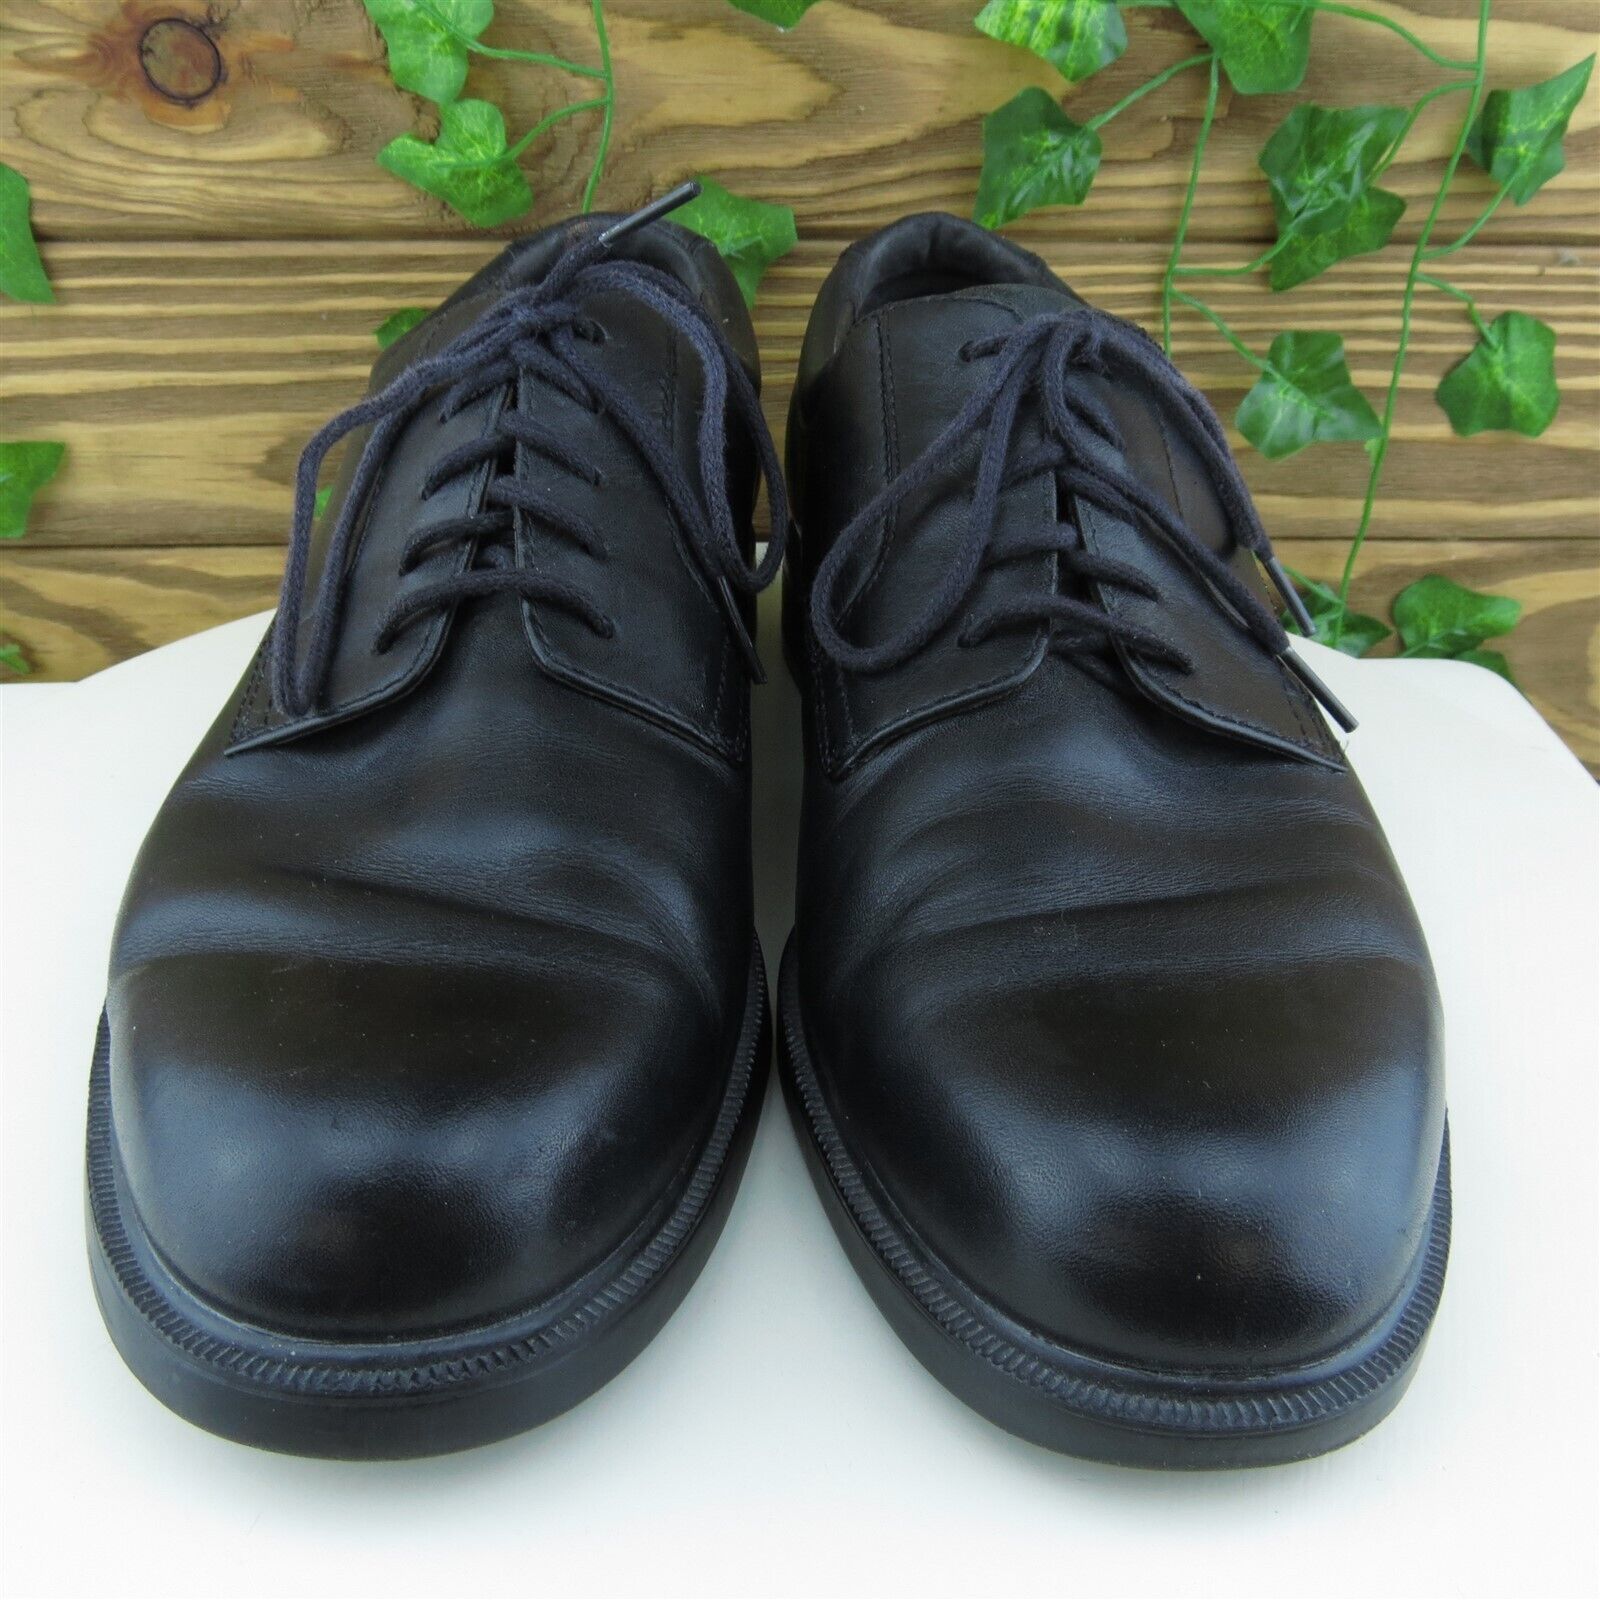 Primary image for Rockport Men Derby Oxfords Shoes  Black Leather Lace Up Size 10 Medium (D, M)